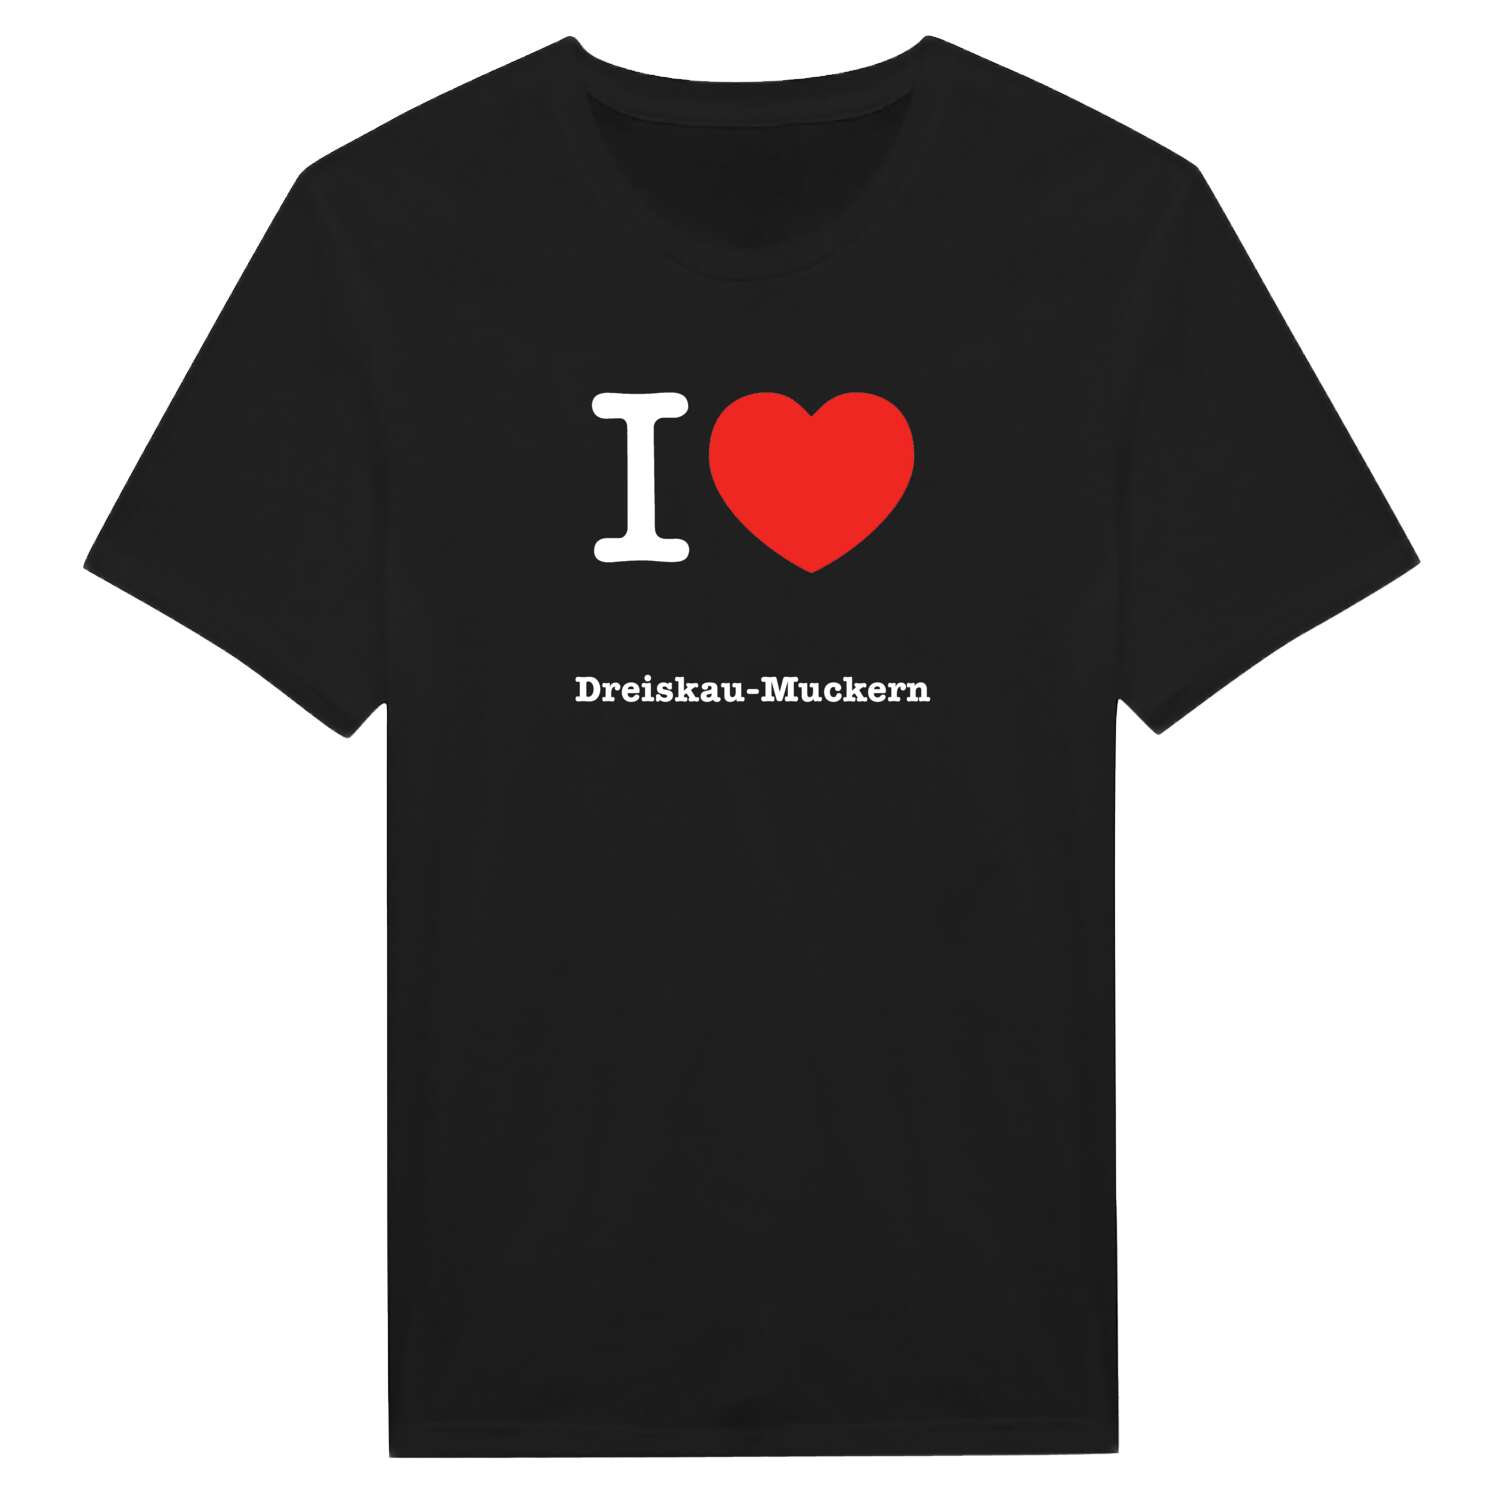 Dreiskau-Muckern T-Shirt »I love«